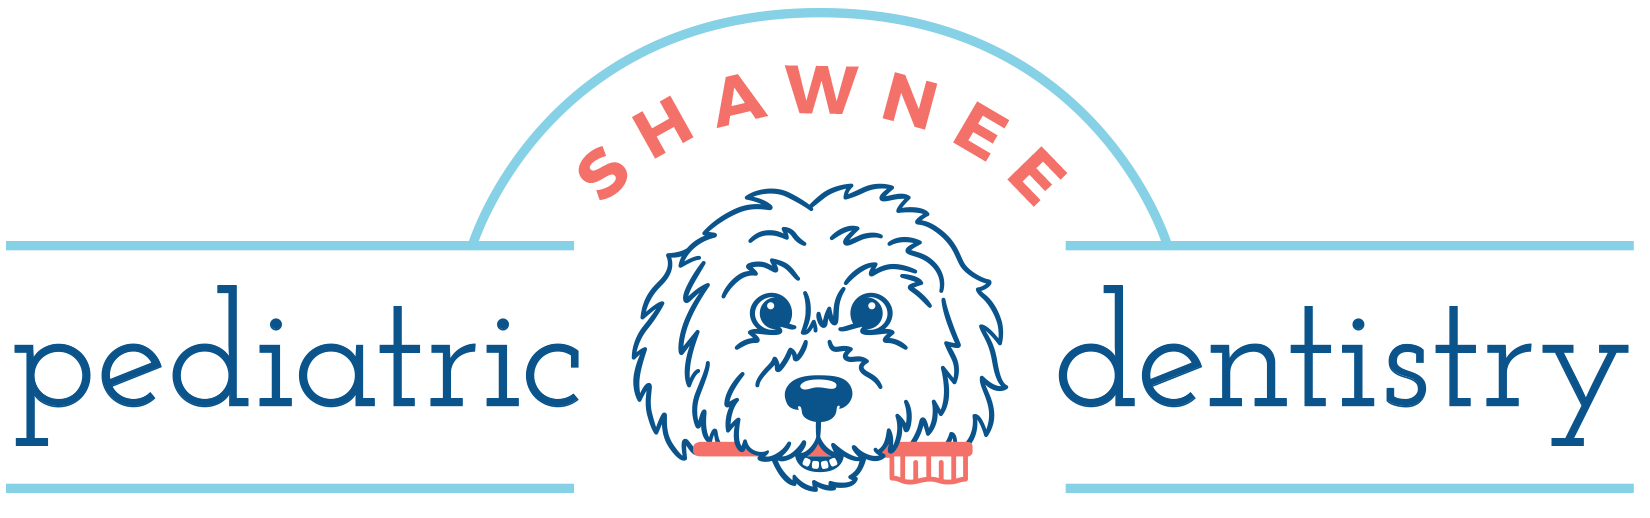 Shawnee Pediatric Dentistry | Pawsitive, healthy smiles.